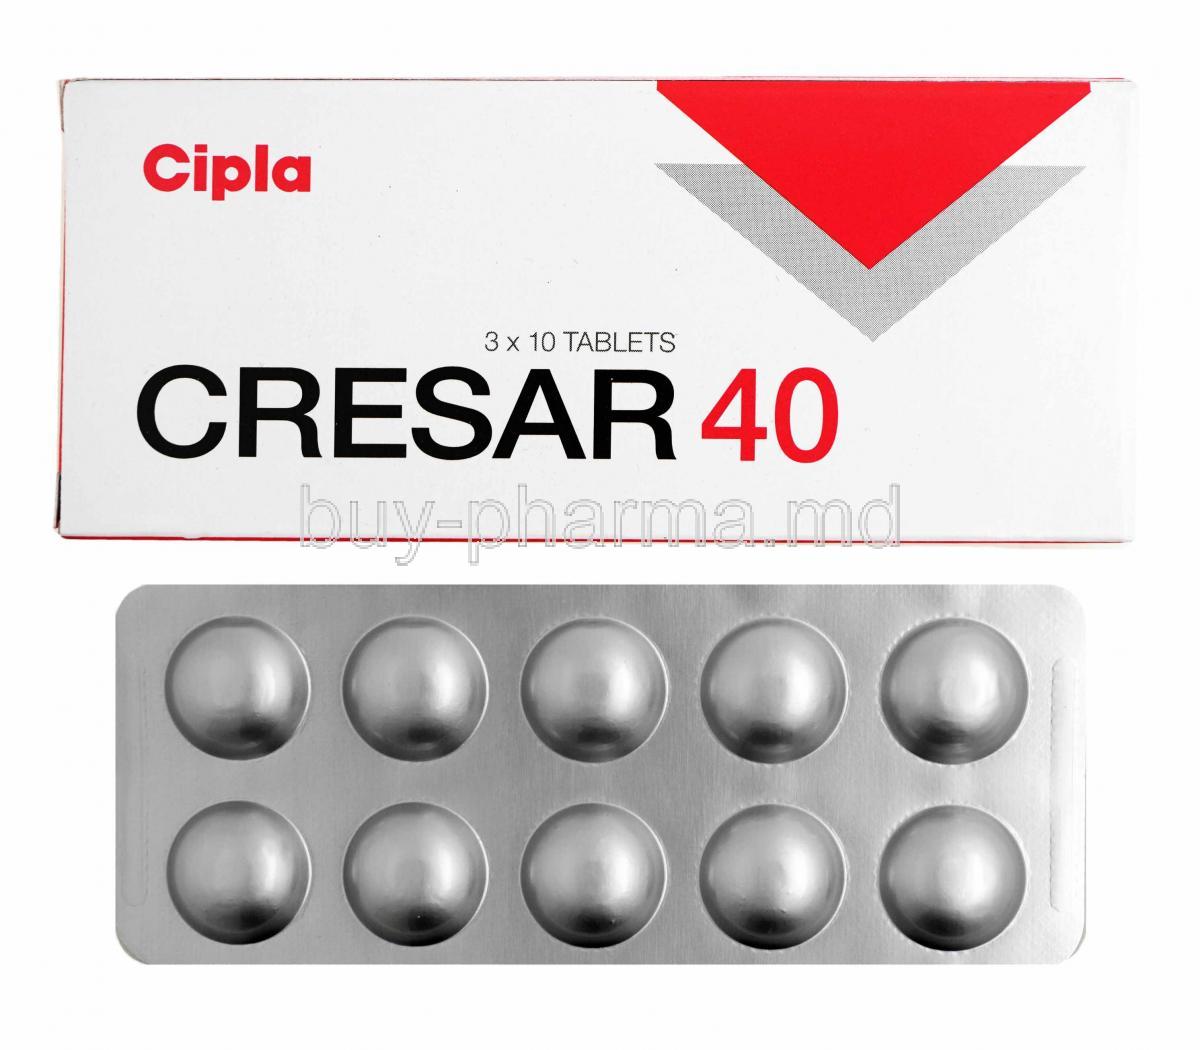 Cresar, Telmisartan 40mg box and tablets copy